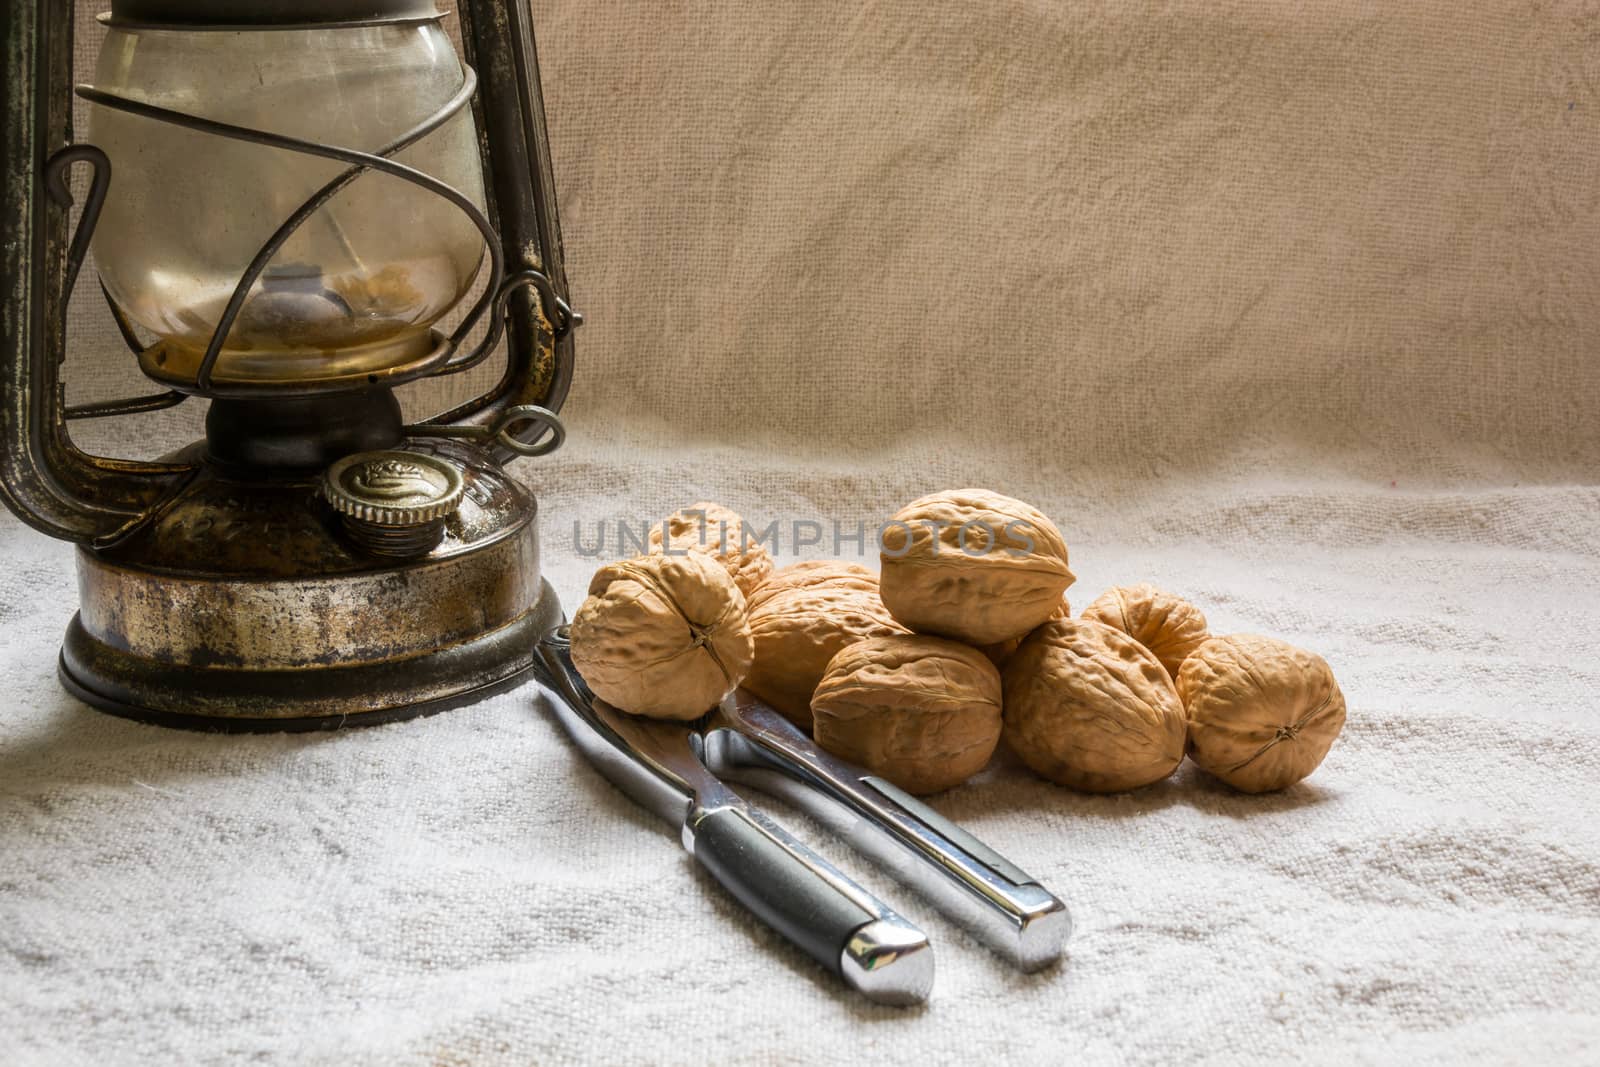 Set with some walnuts, a nutcracker and a lantern